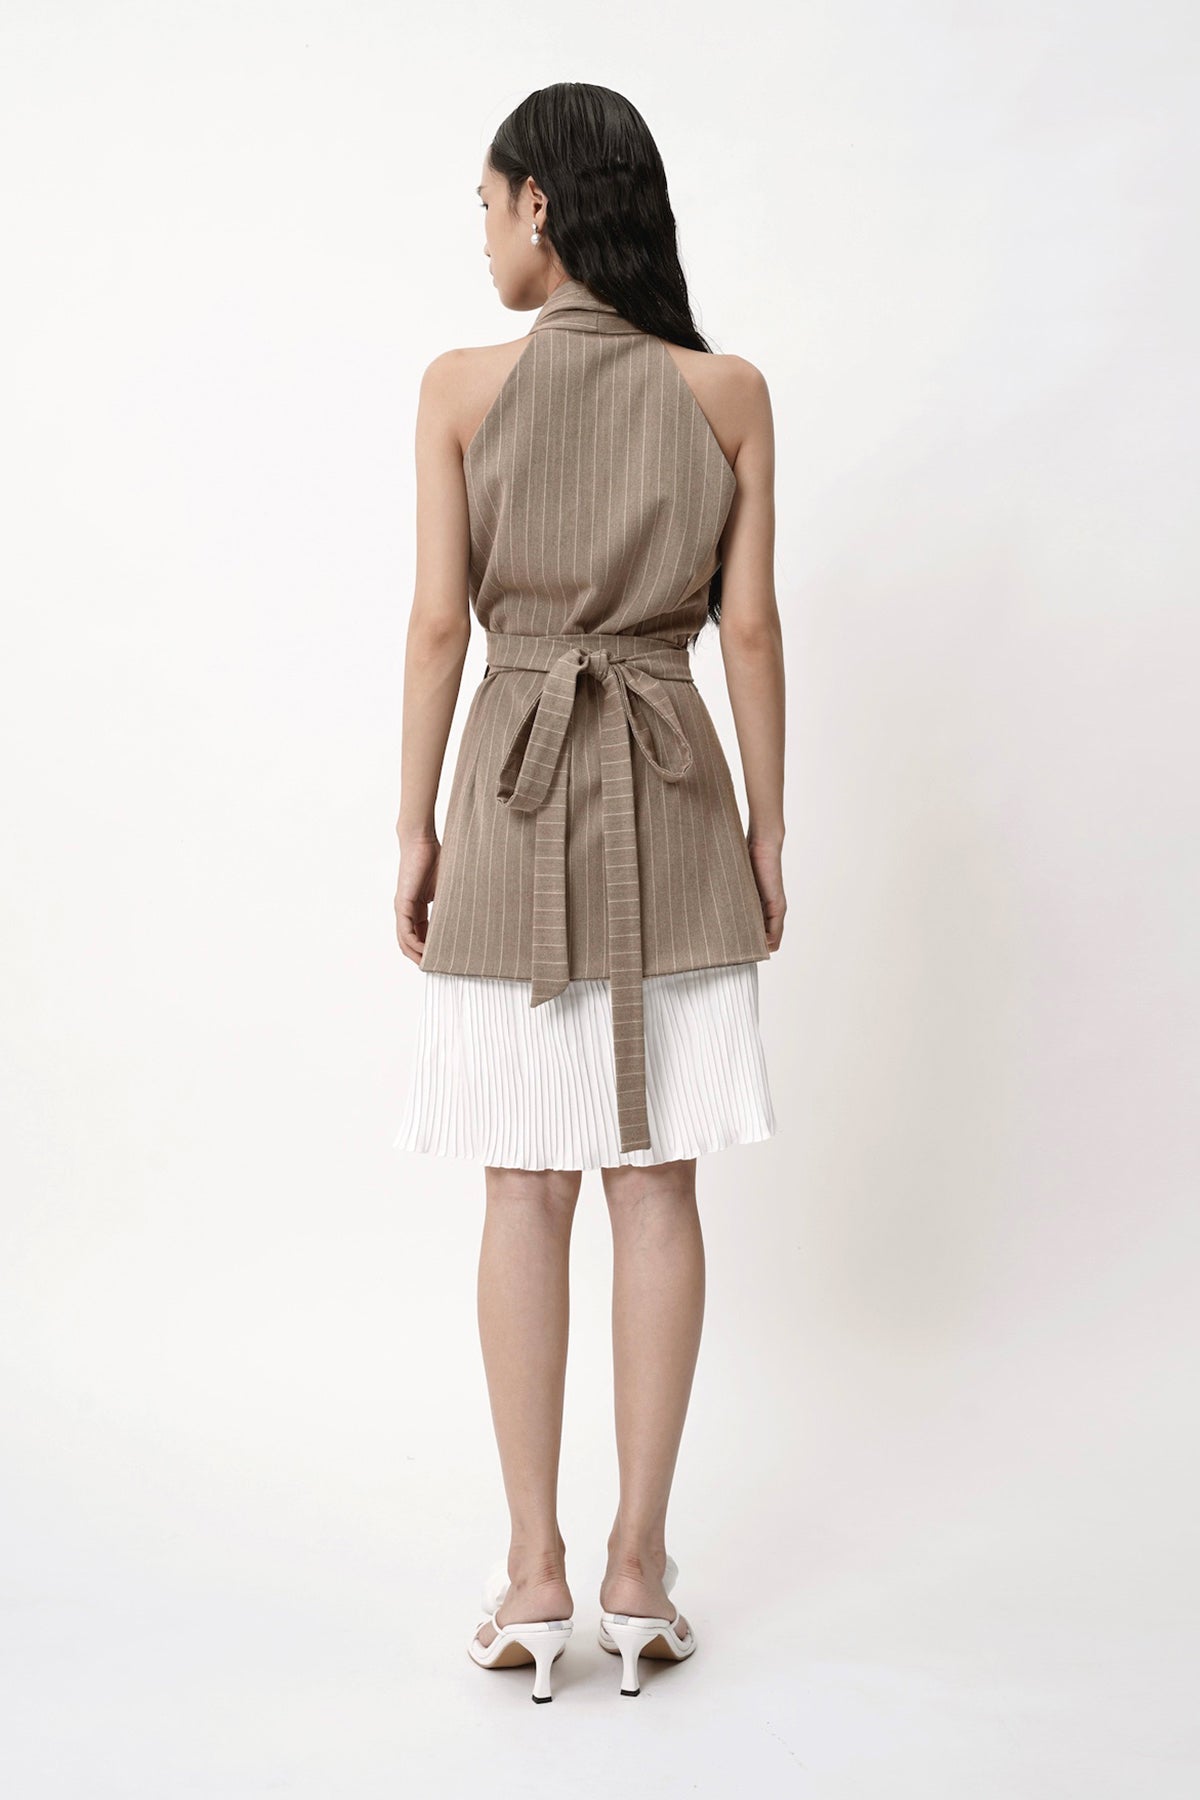 Sorley Wrap Dress In Brown Stripes (3 LEFT)